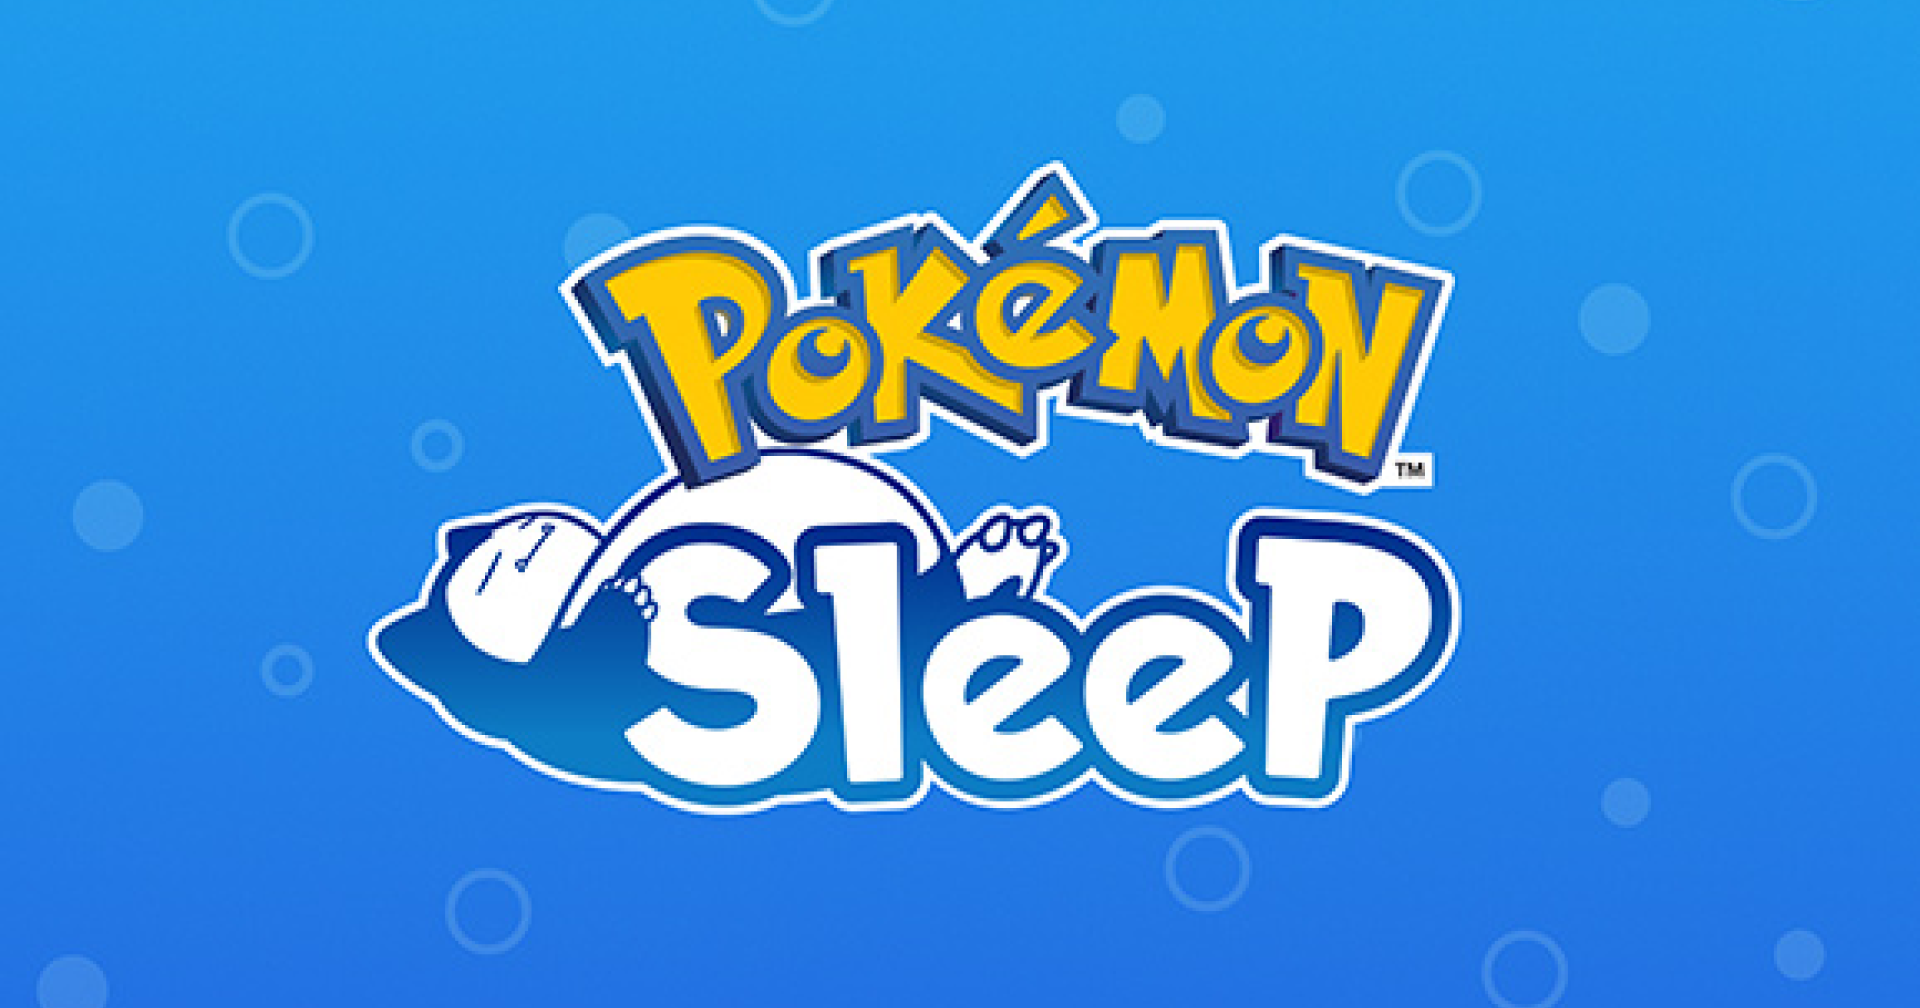 Pokémon Sleep เพียงแค่นอนหลับคุณก็เป็น Pokemon Trainer ได้